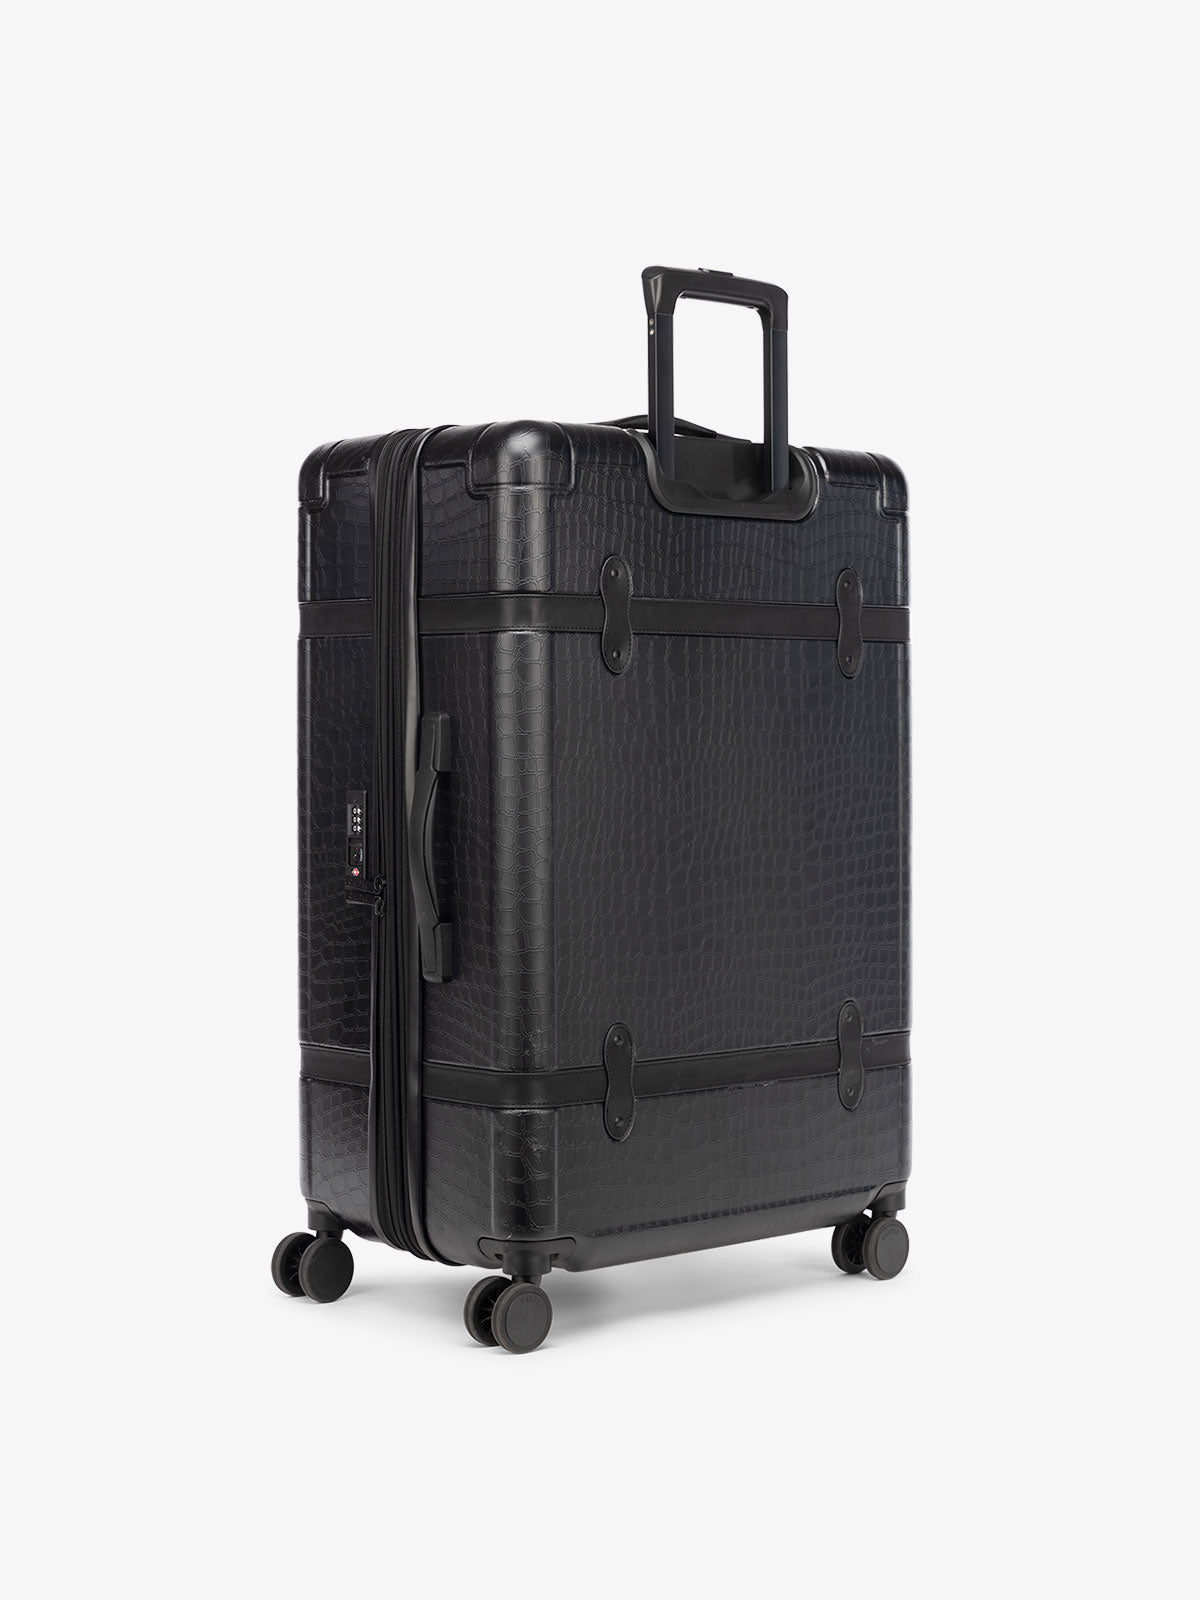 Ambeur 2-Piece Luggage Set - Black